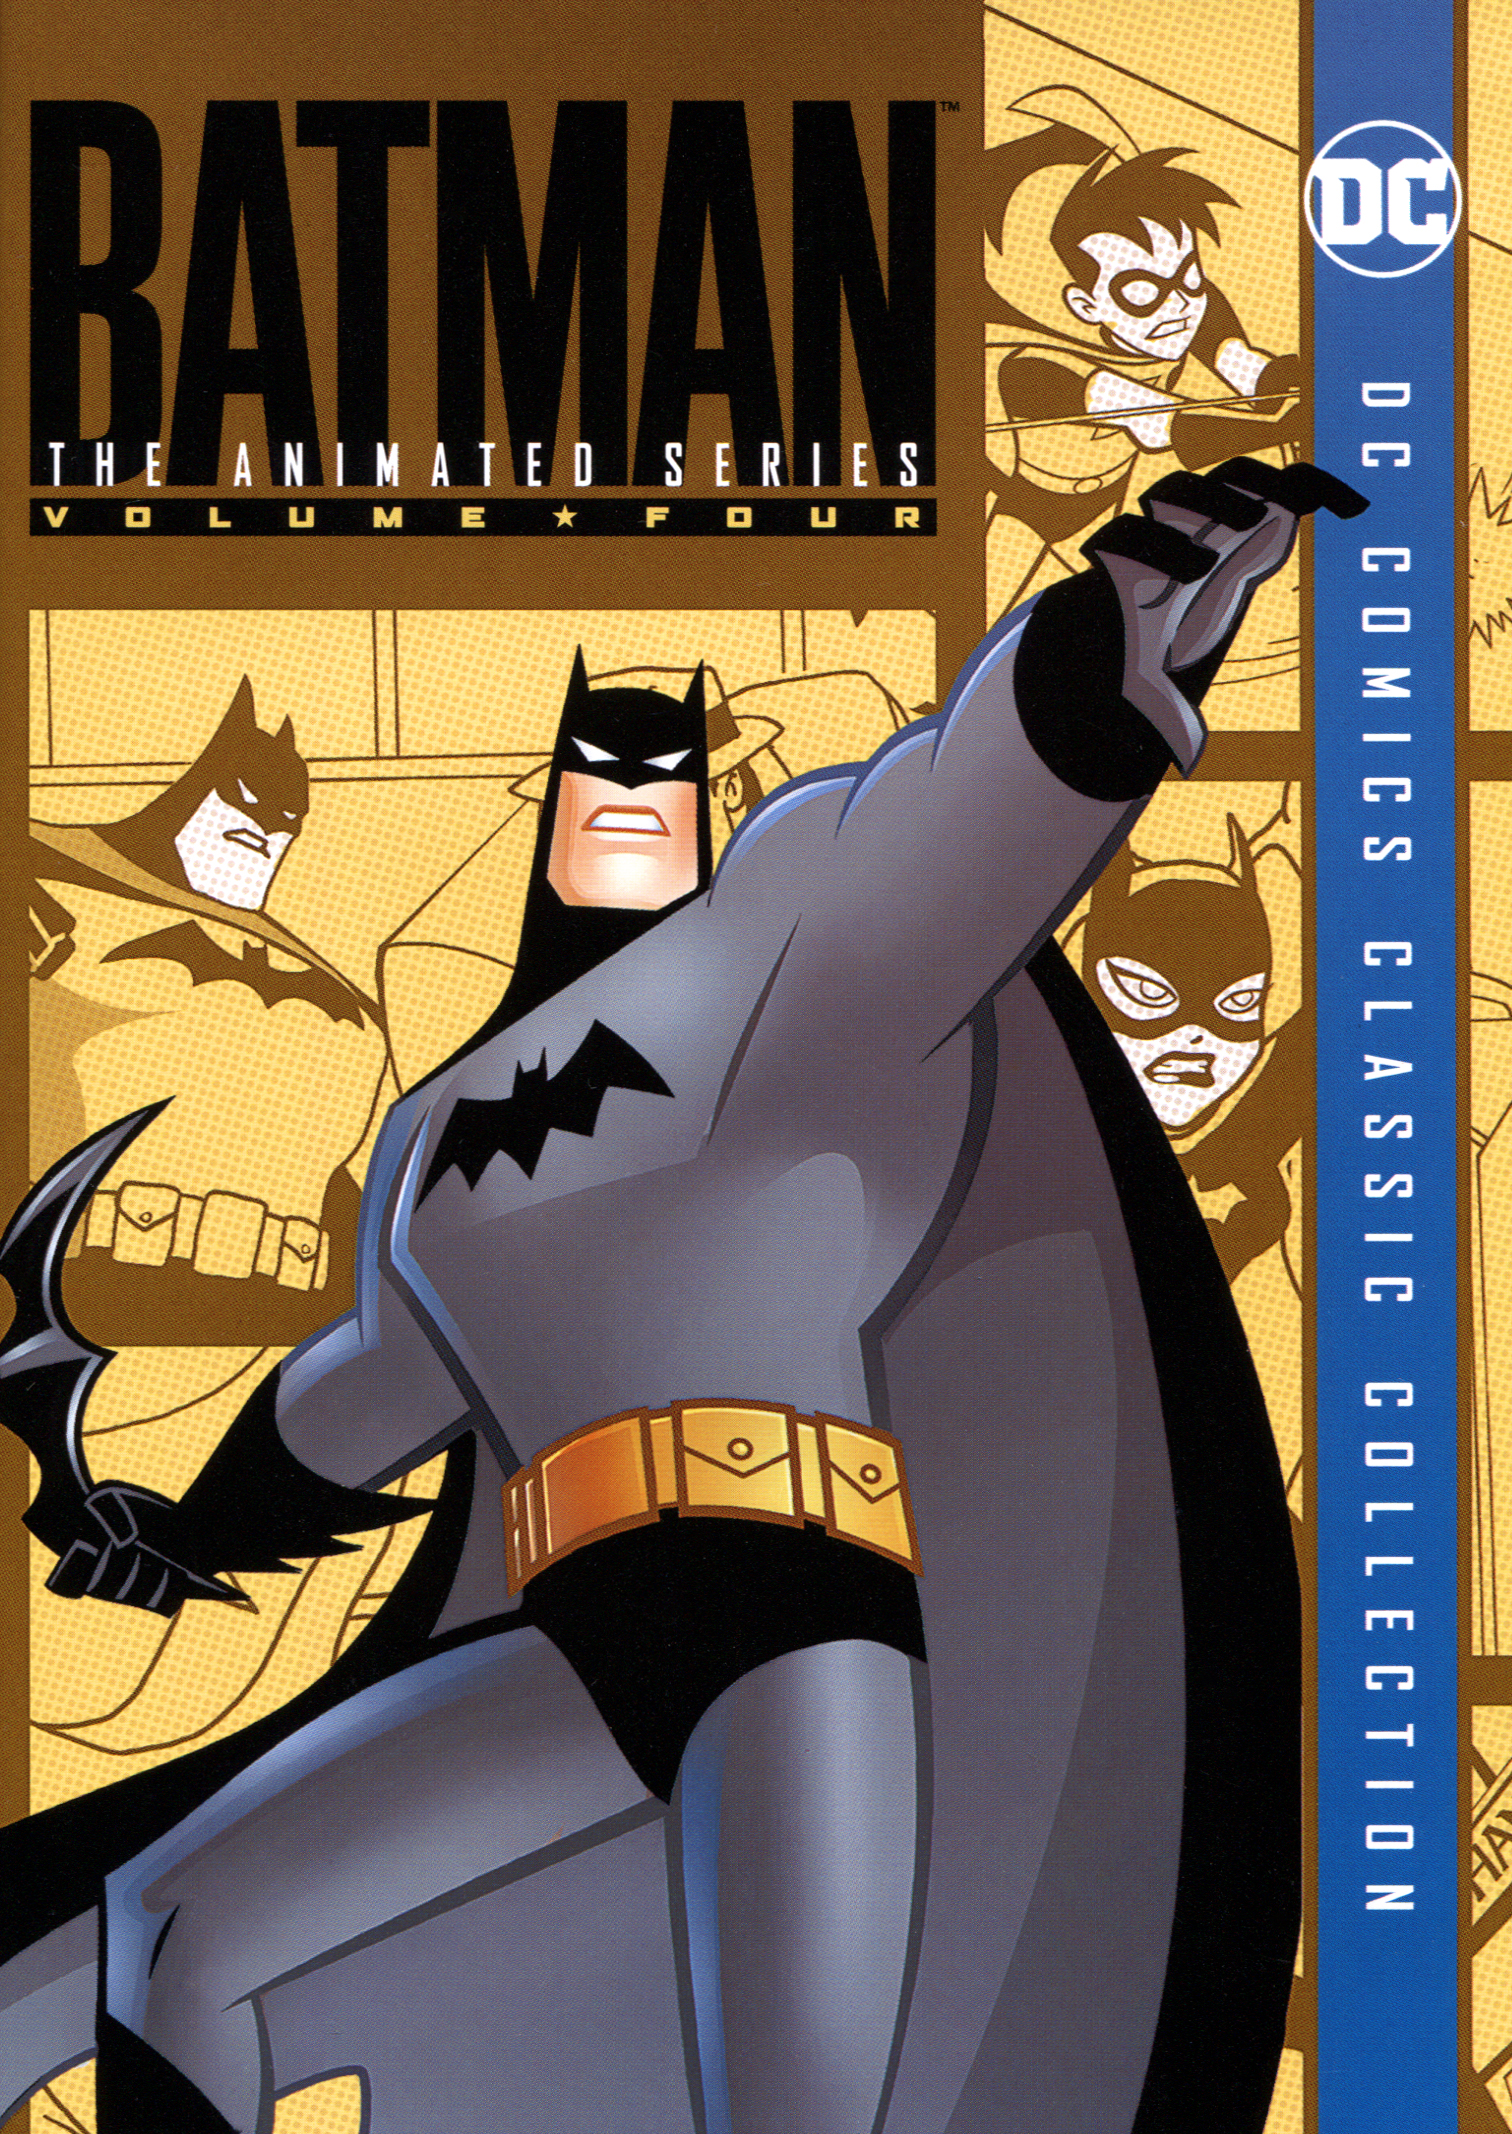 Batman: The Animated Series Vol. 4 - Best Buy